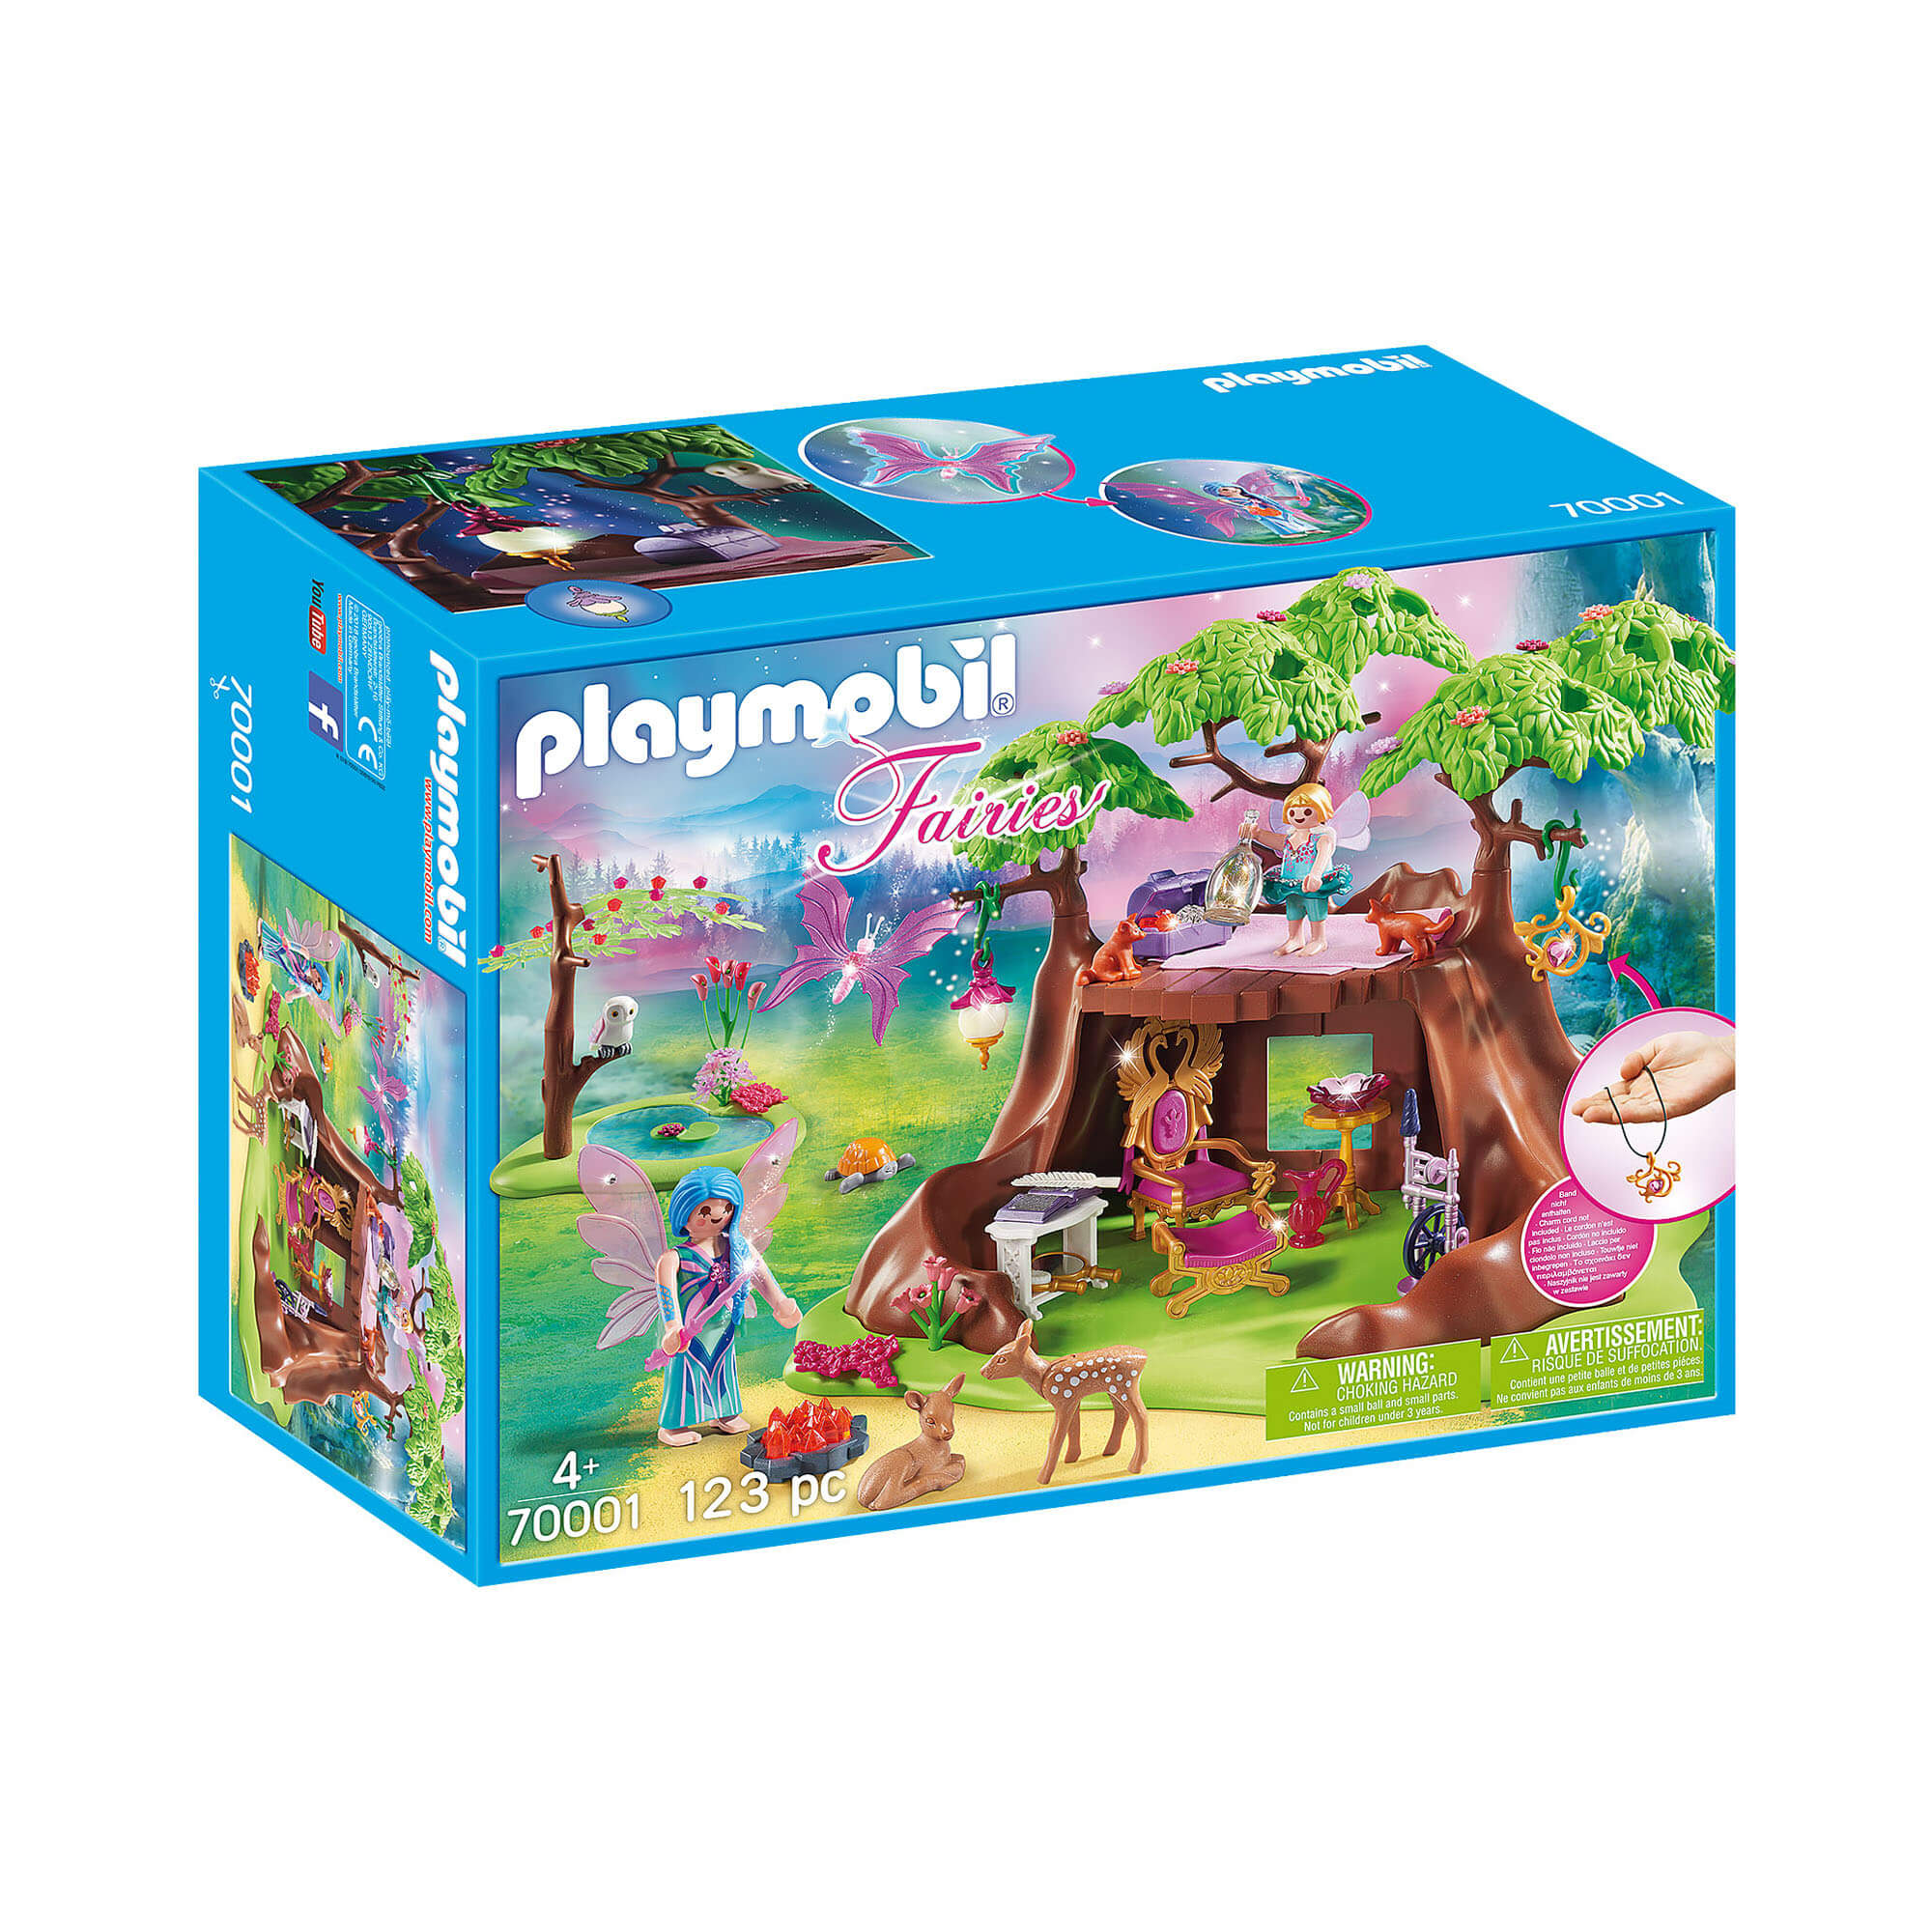 PLAYMOBIL Limited Edition Fairies Fairy Forest House (70001)